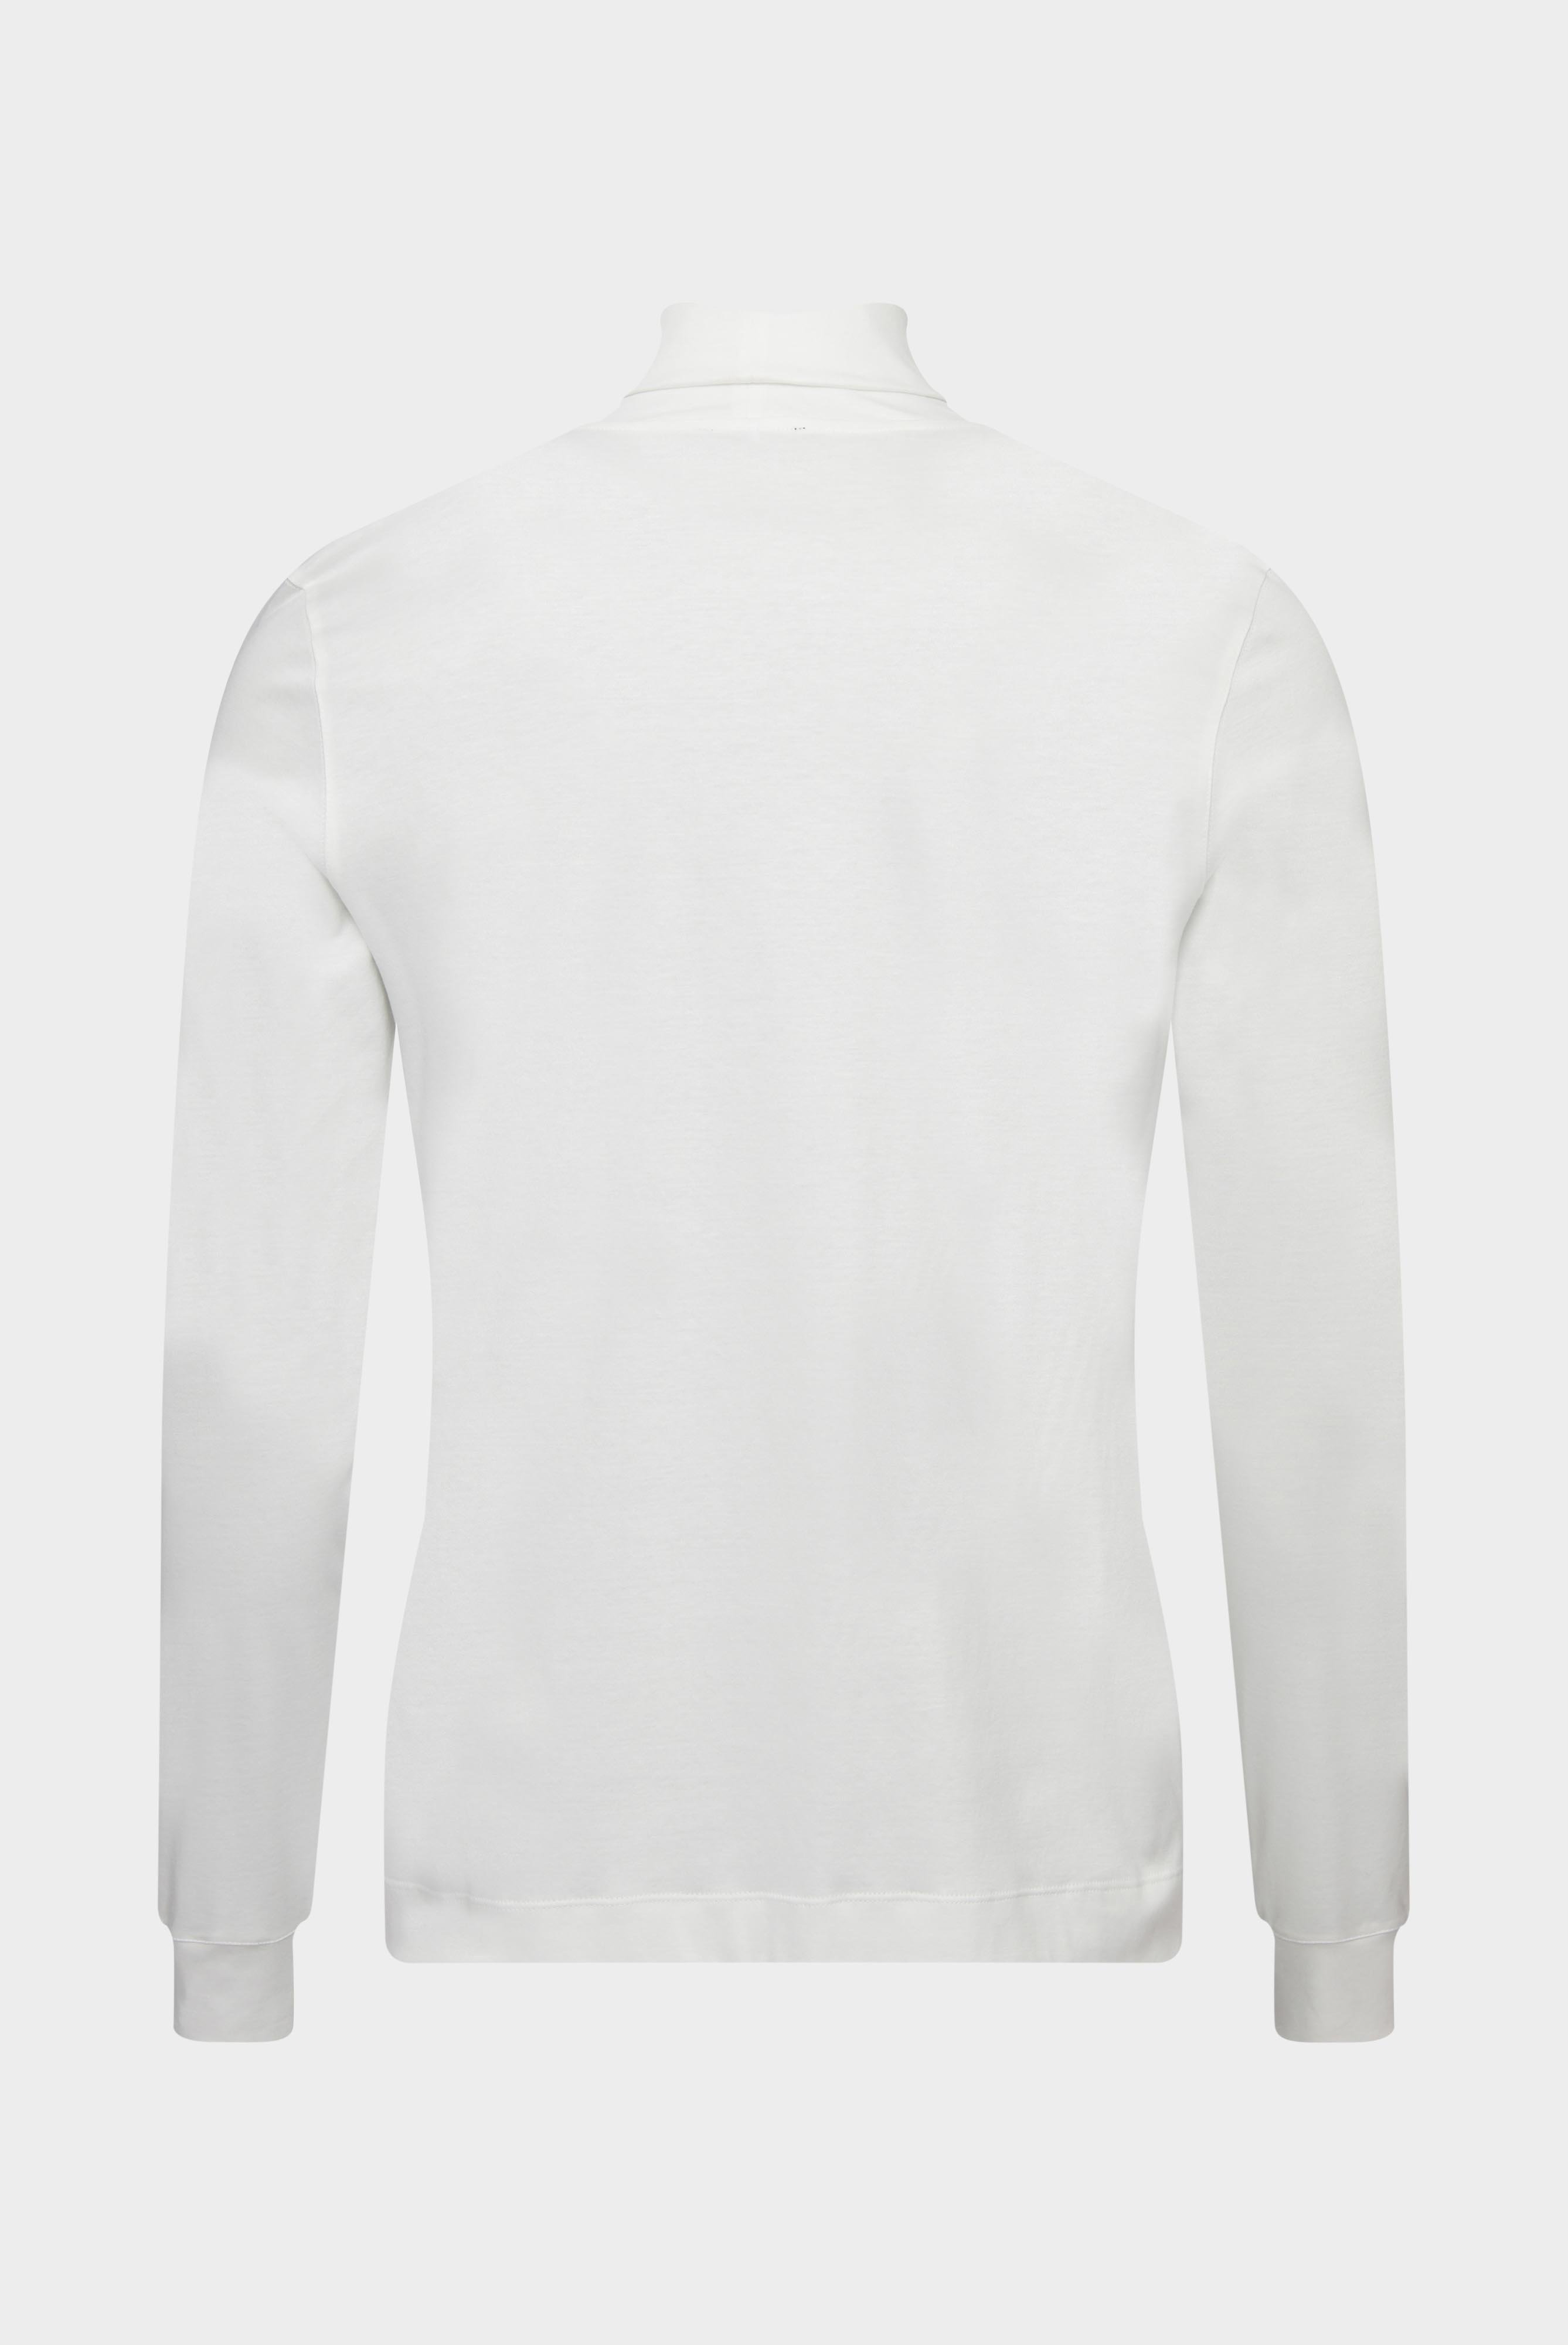 T-Shirts+Rollkragenshirt aus Jersey+20.1719.UX.180031.100.M